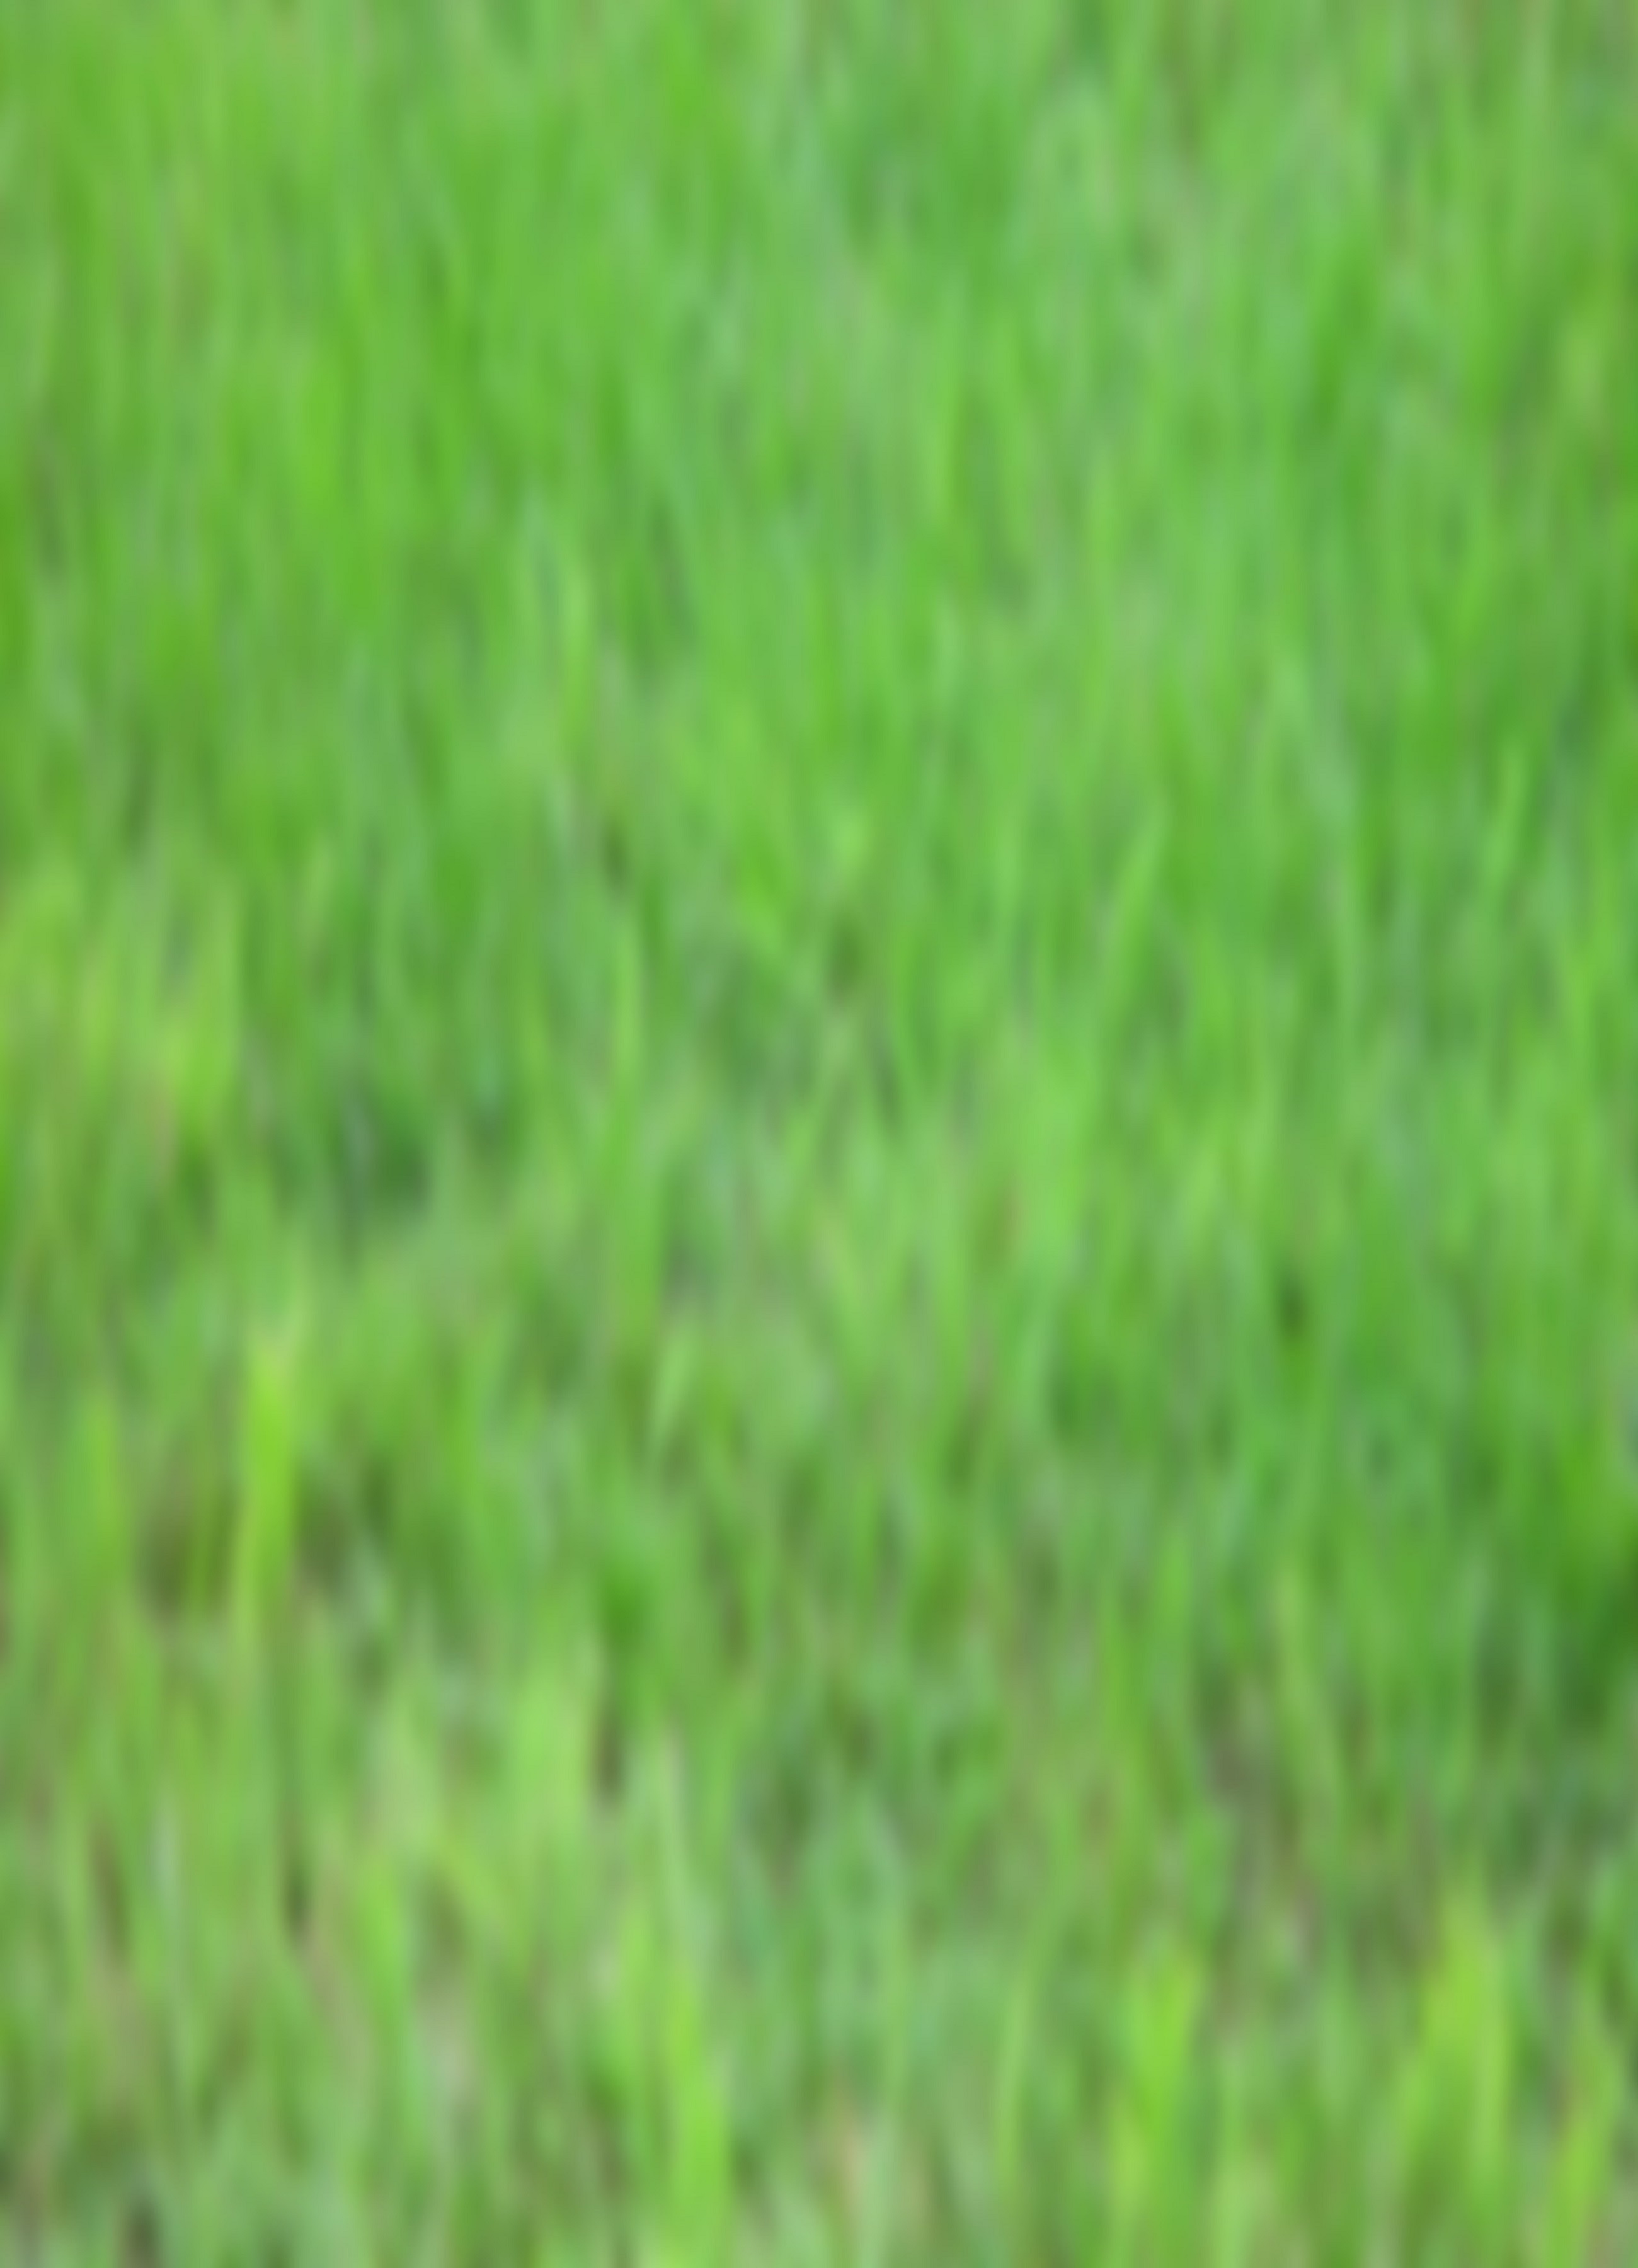 blurred grass12